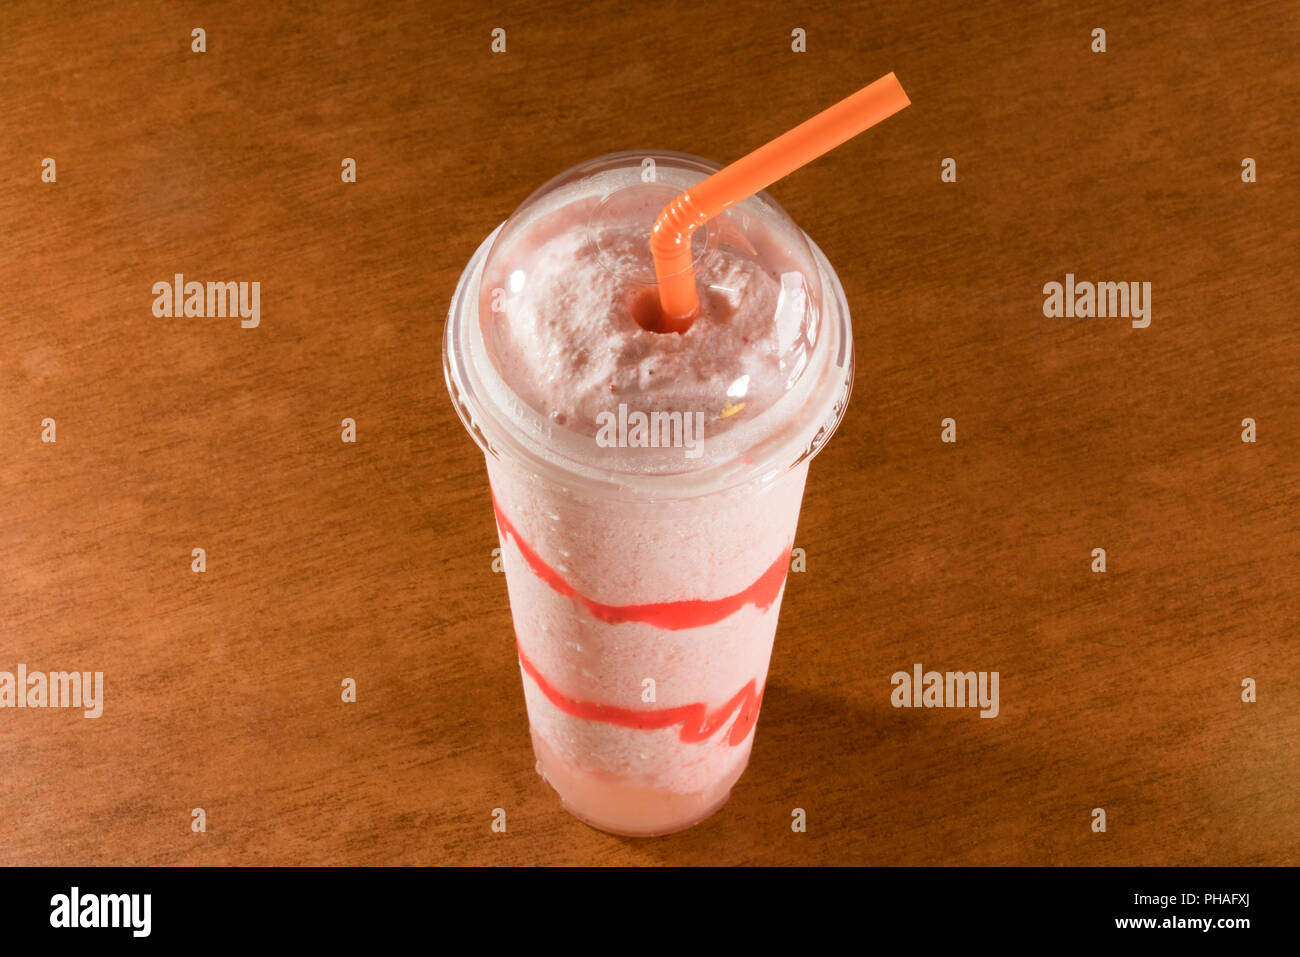 https://c8.alamy.com/comp/PHAFXJ/fresh-strawberry-smoothie-in-plastic-cup-PHAFXJ.jpg